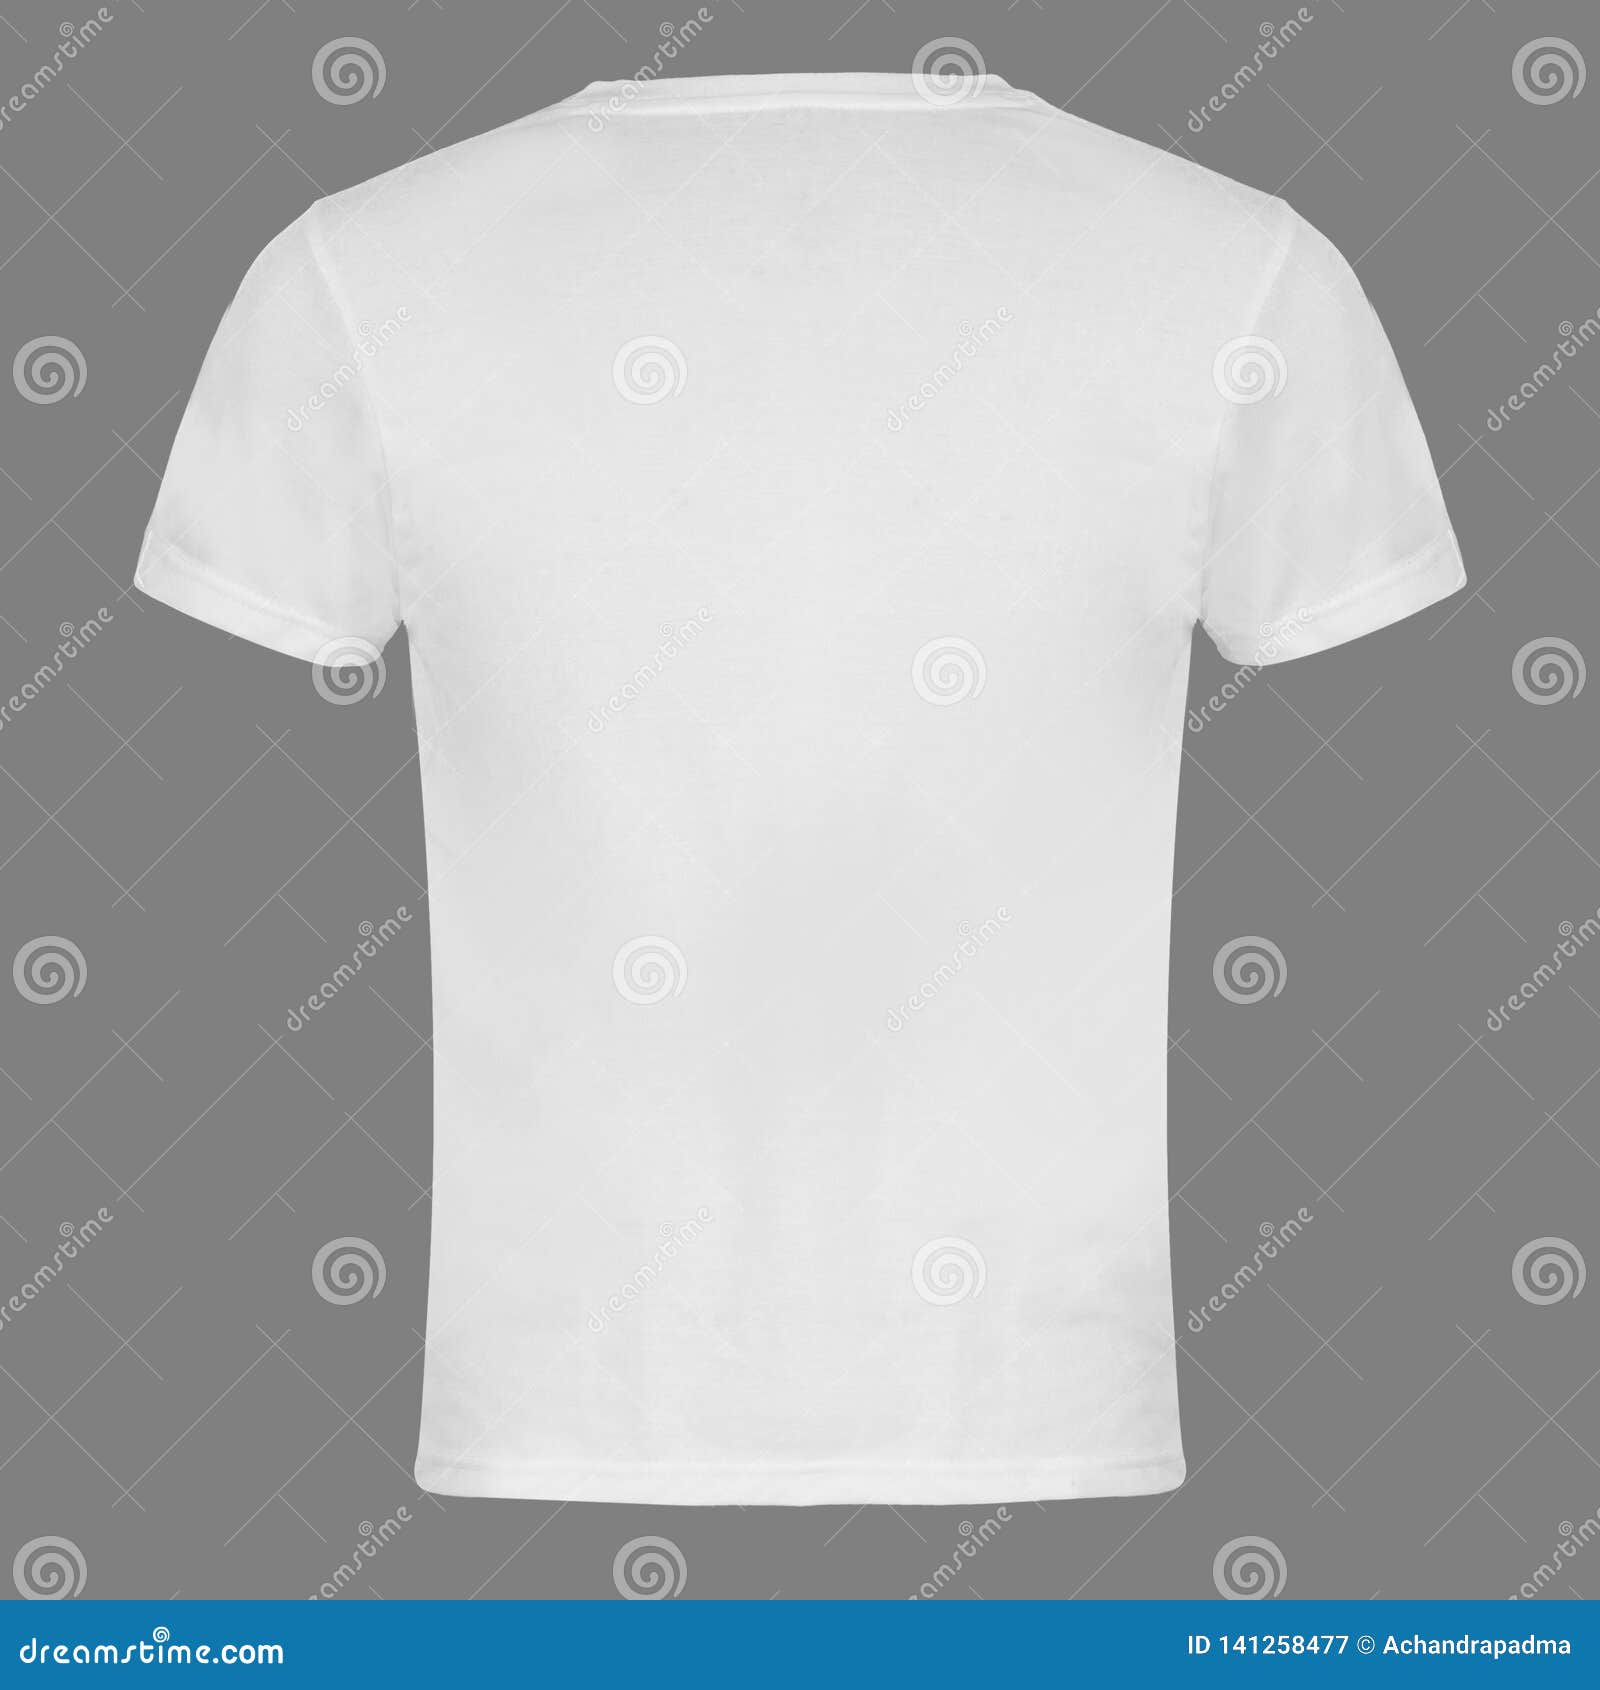 back of plain white t-shirt